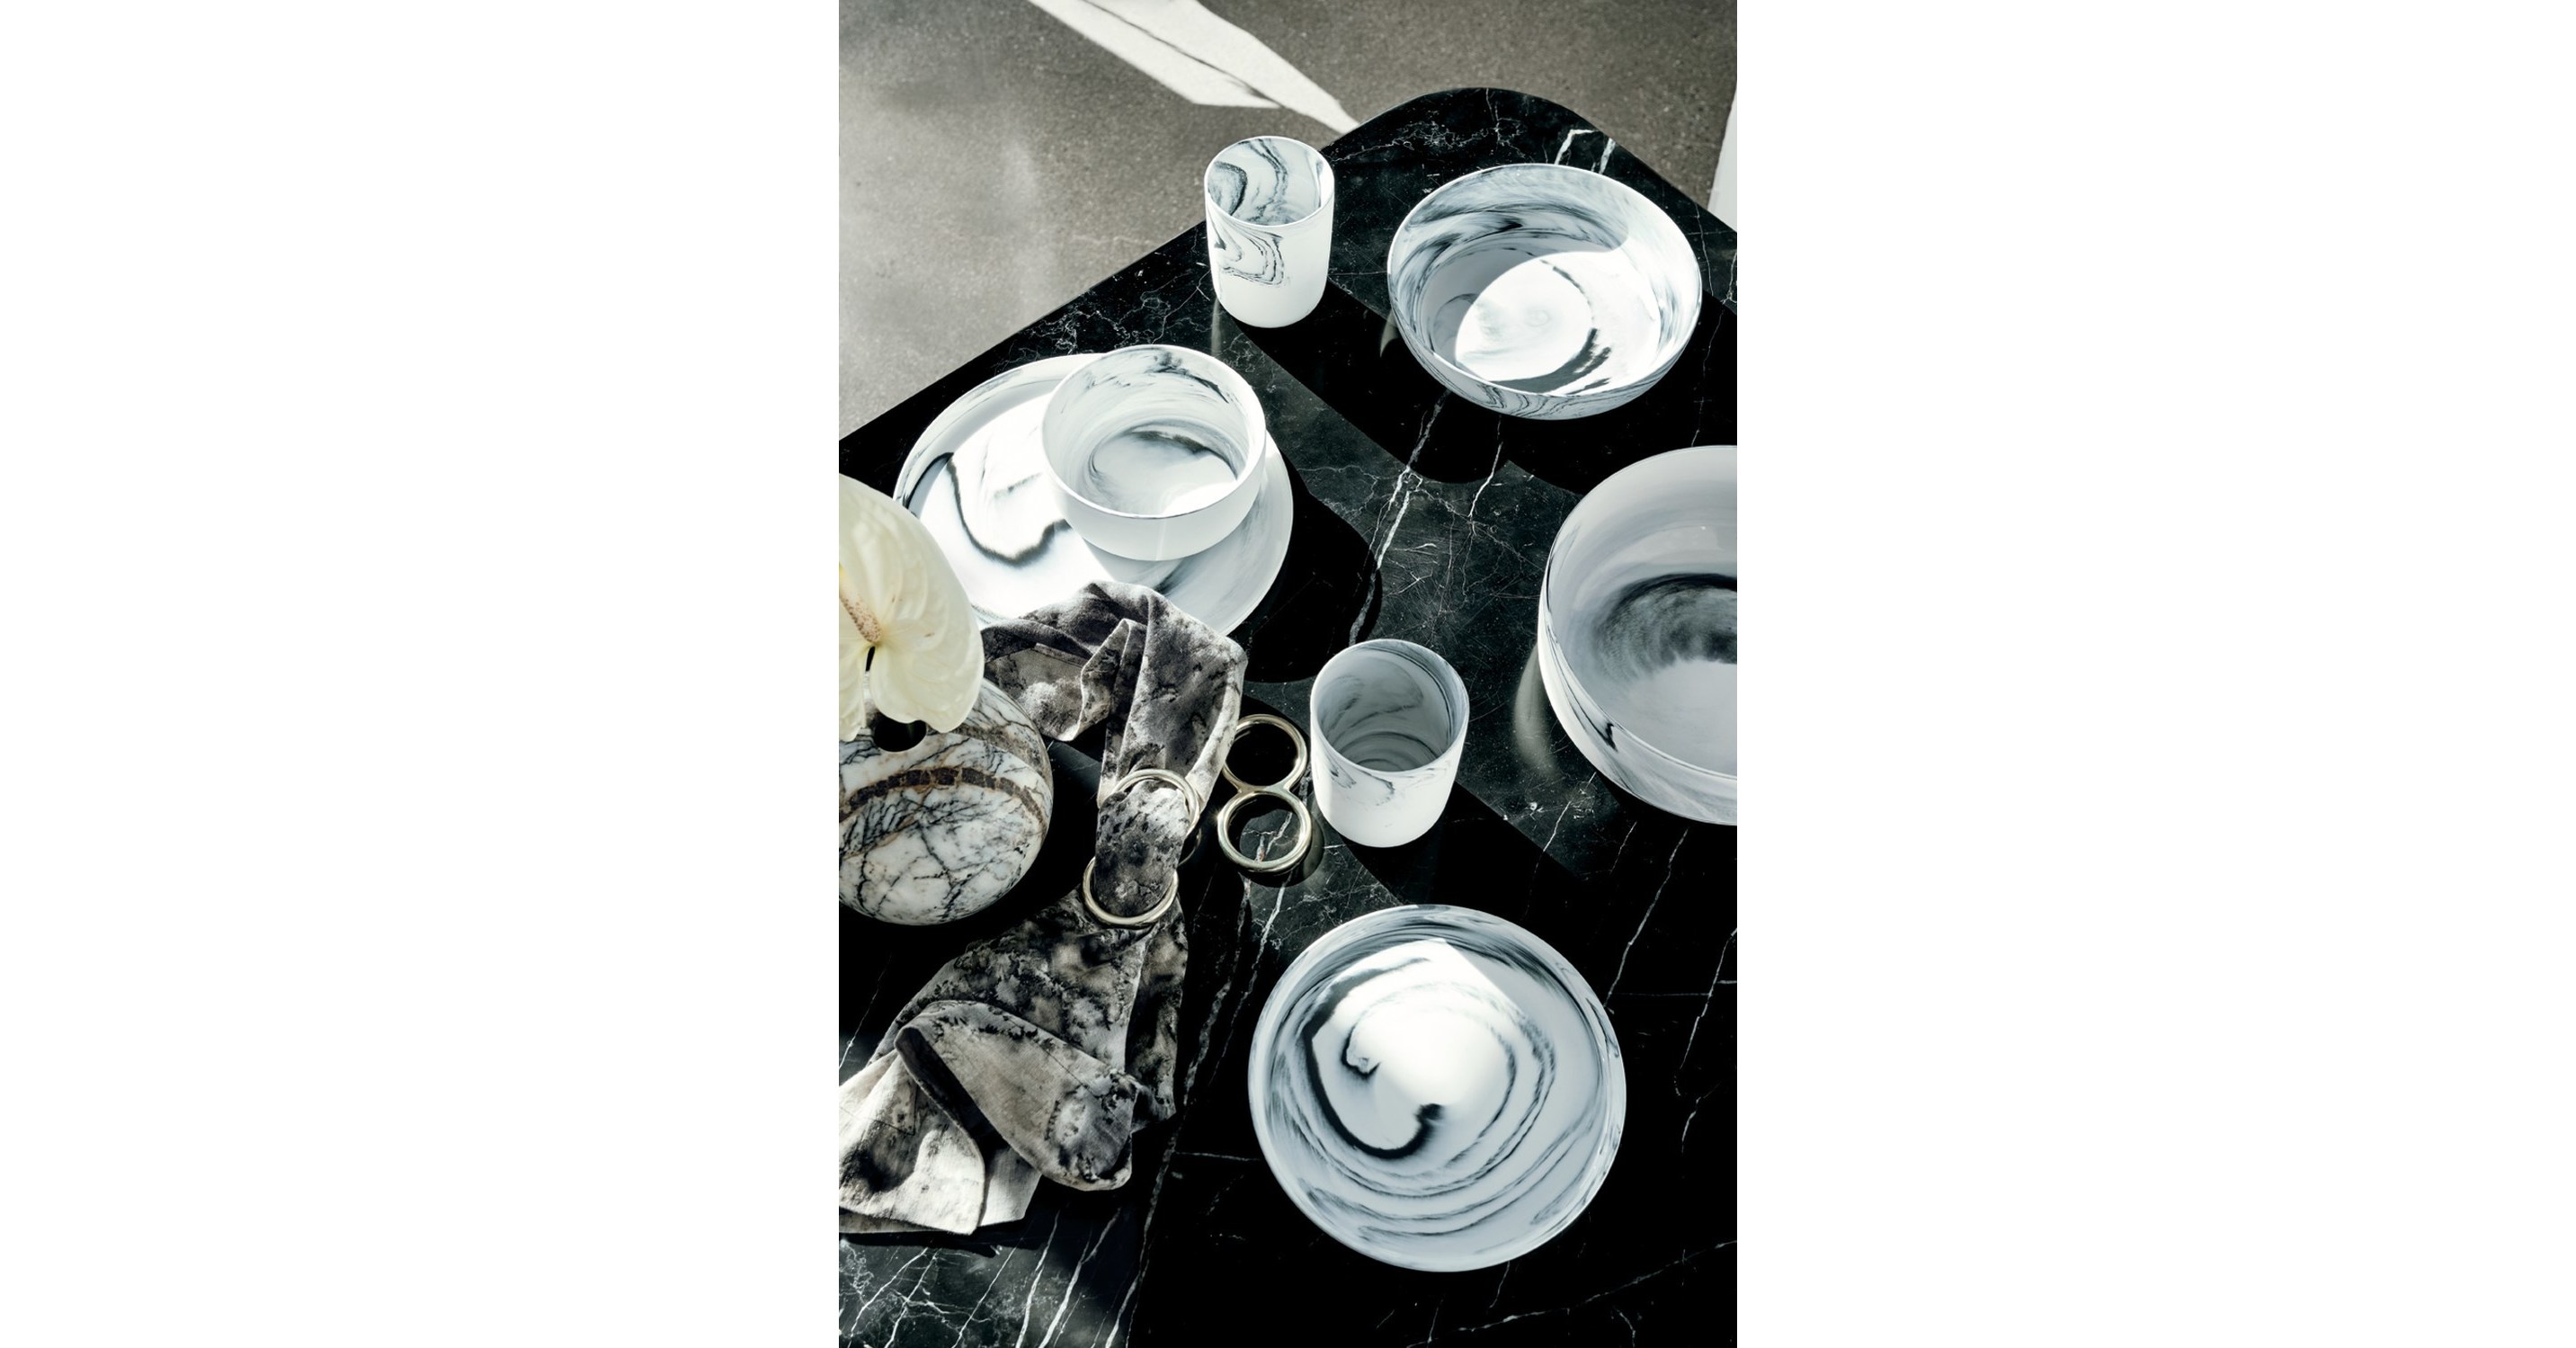 Swirl Black and White Dinnerware Set by Jennifer Fisher